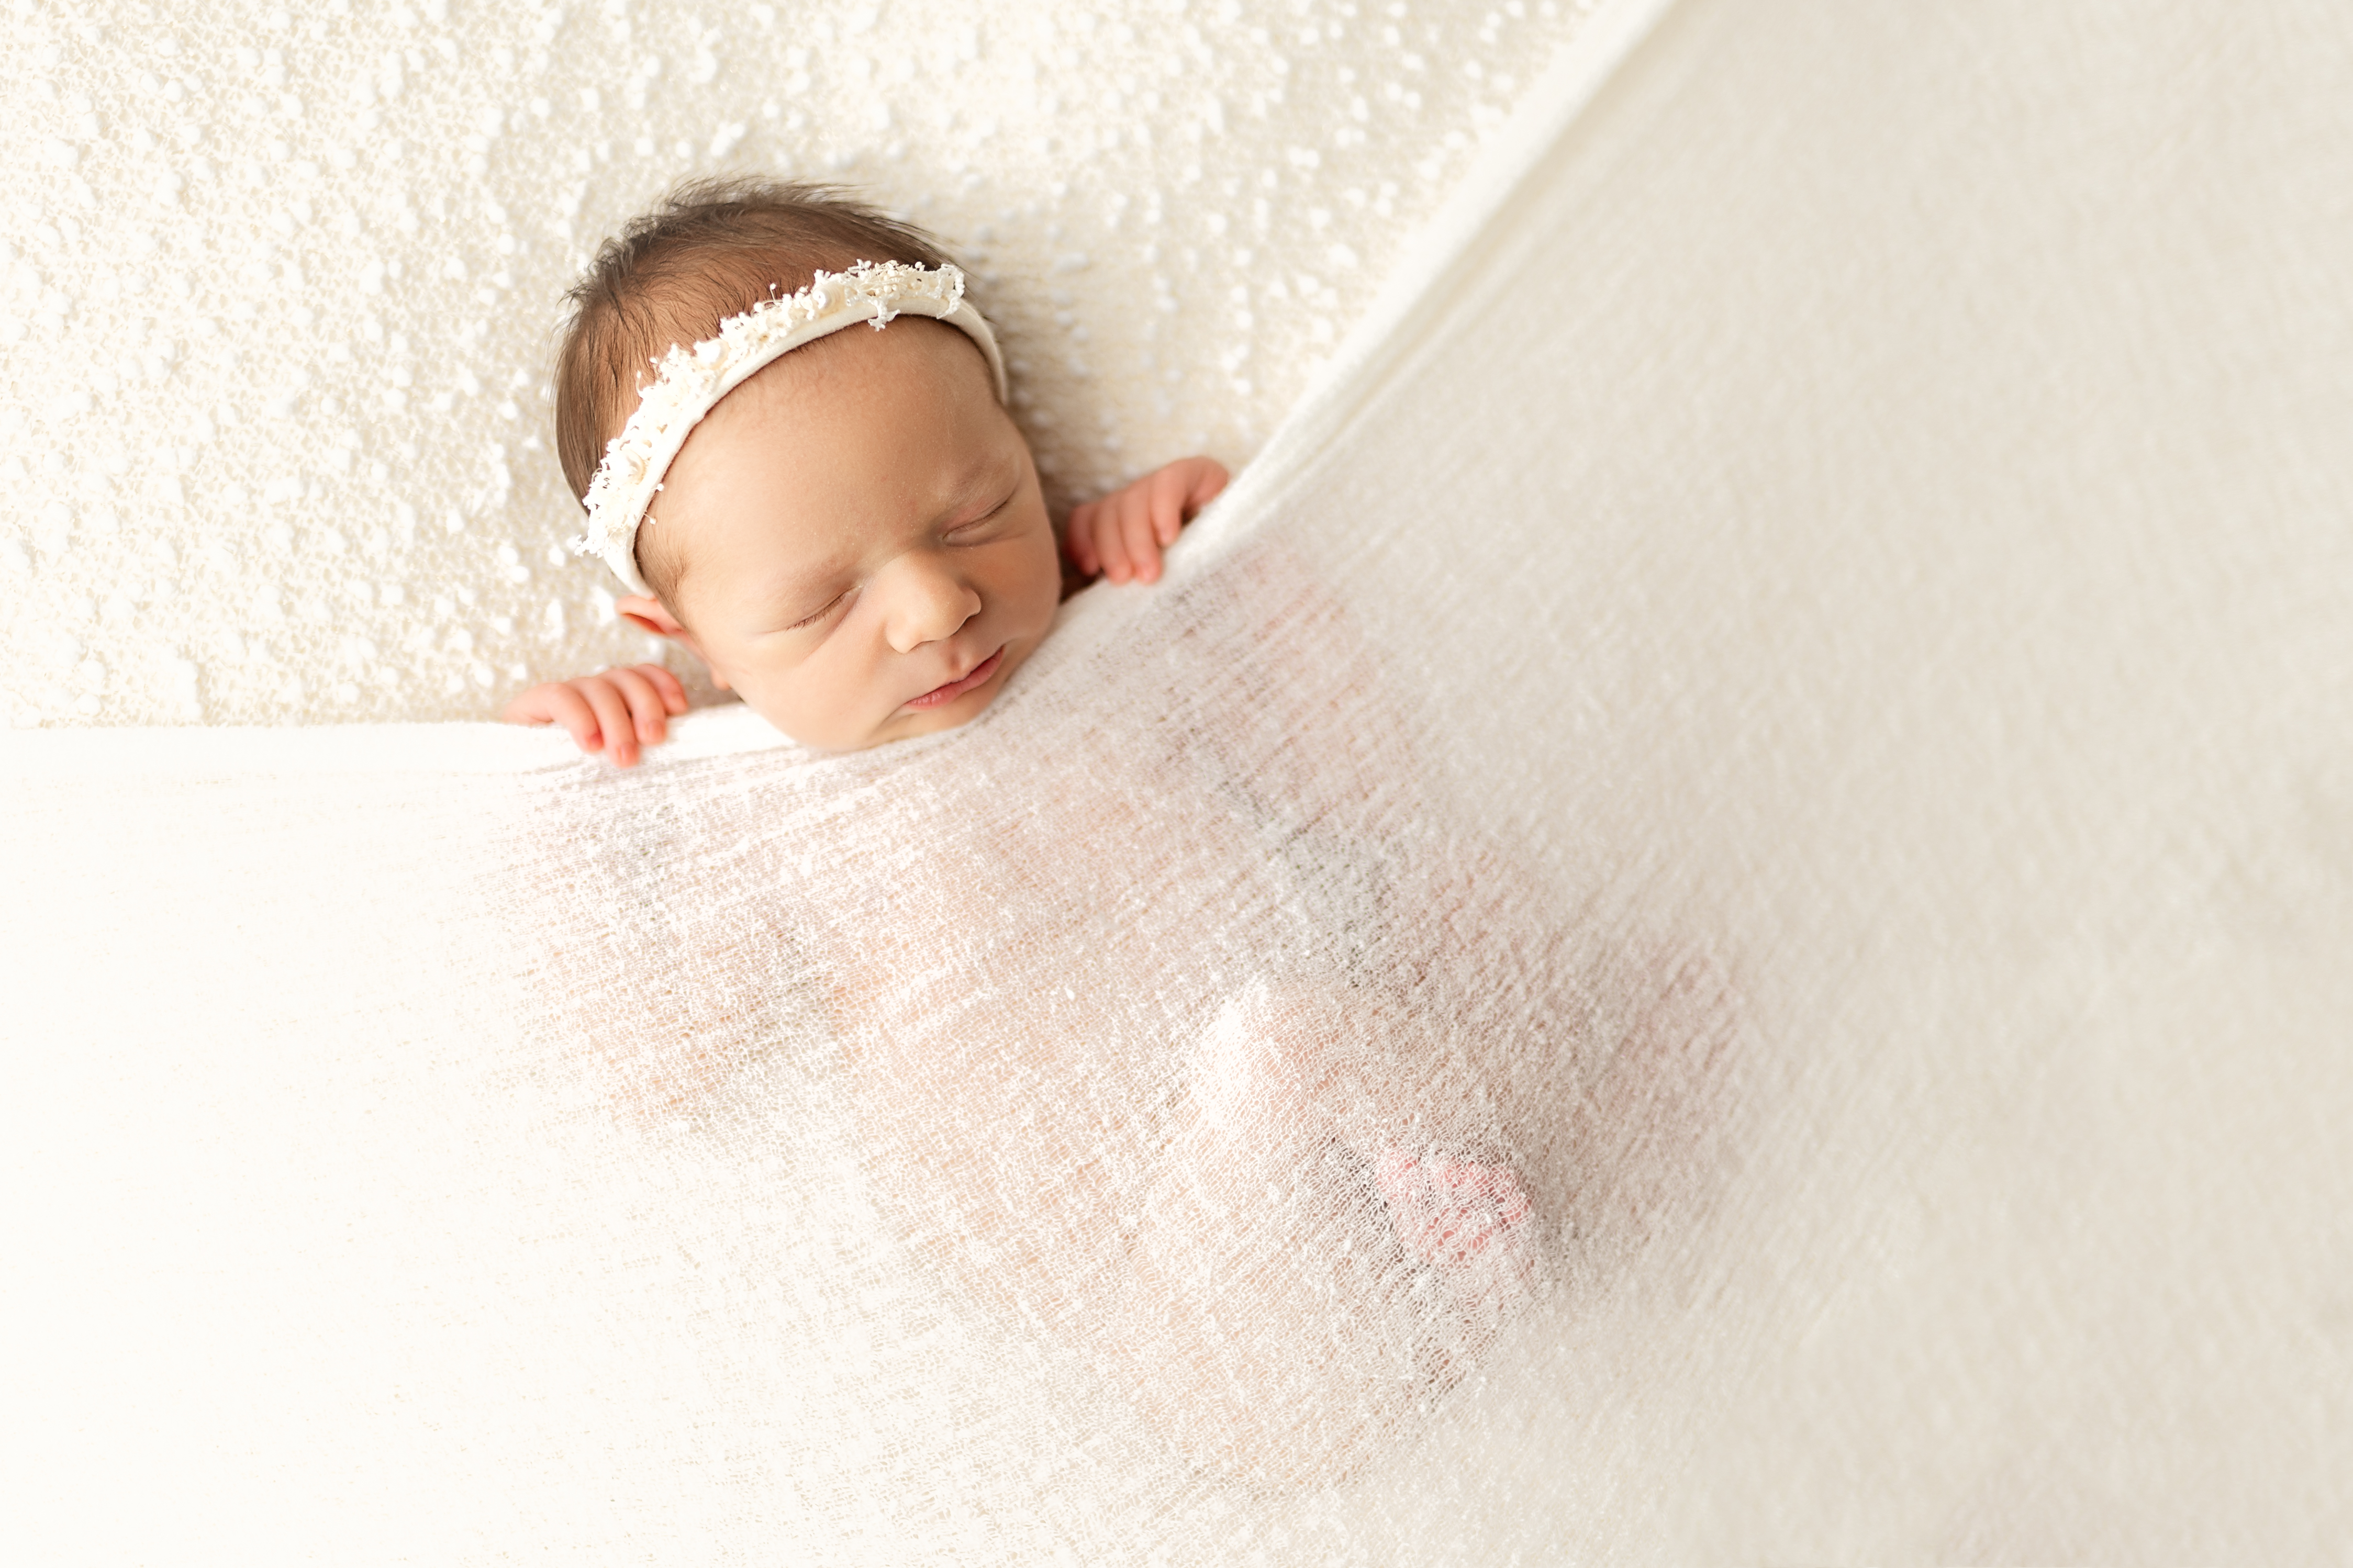 newborn asleep on white backdrop